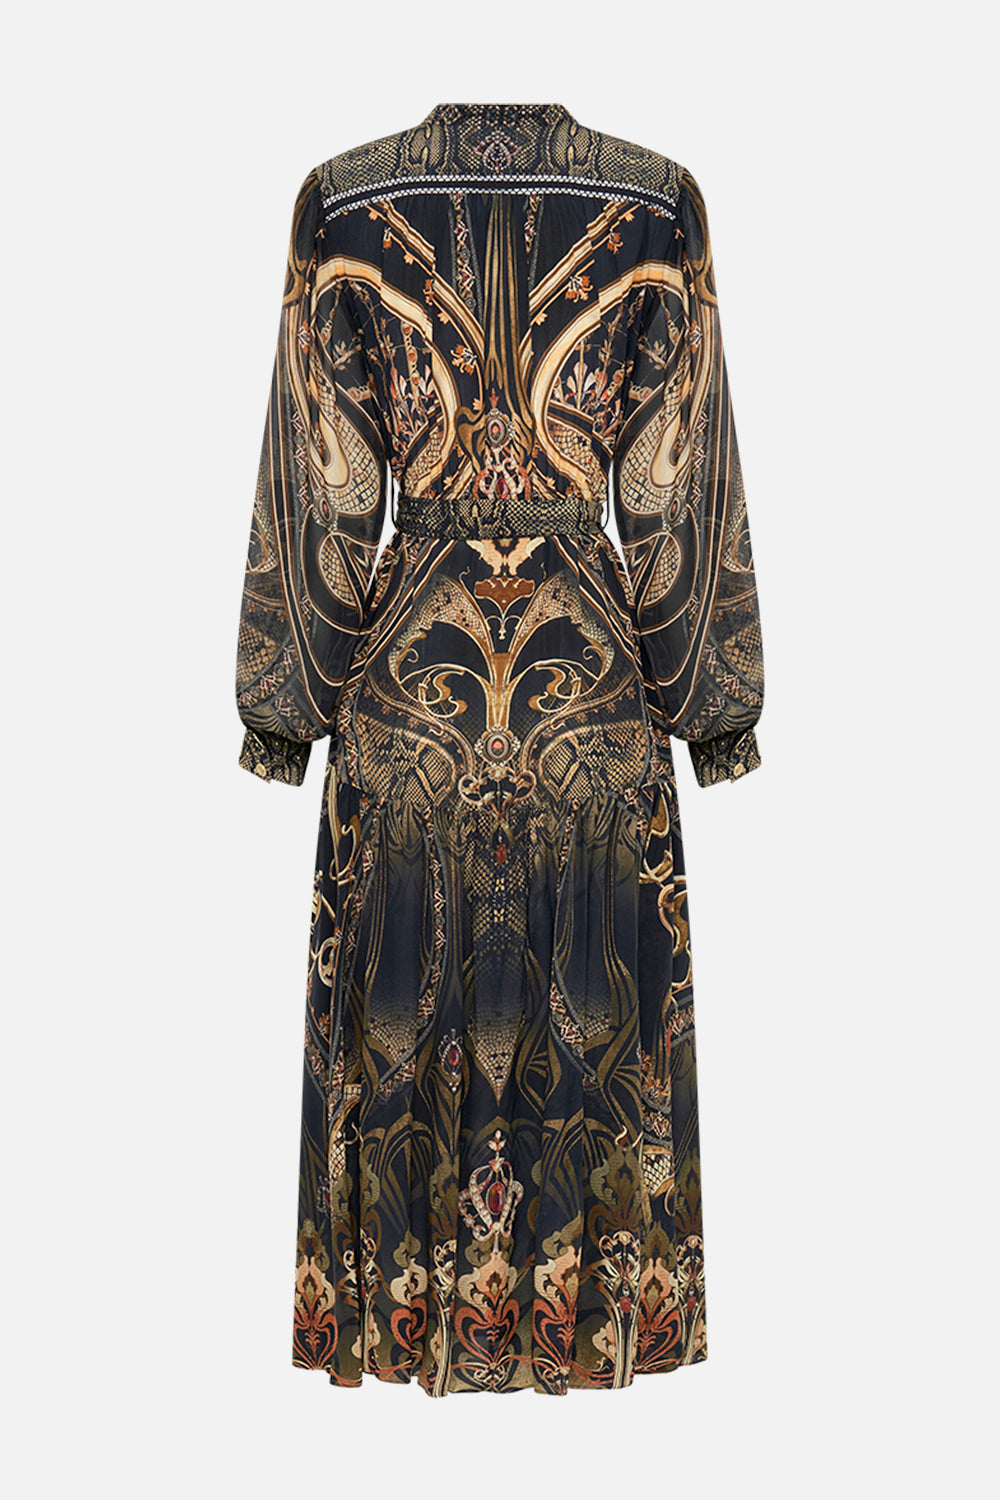 CAMILLA silk button through dress in Nouveau Noir print